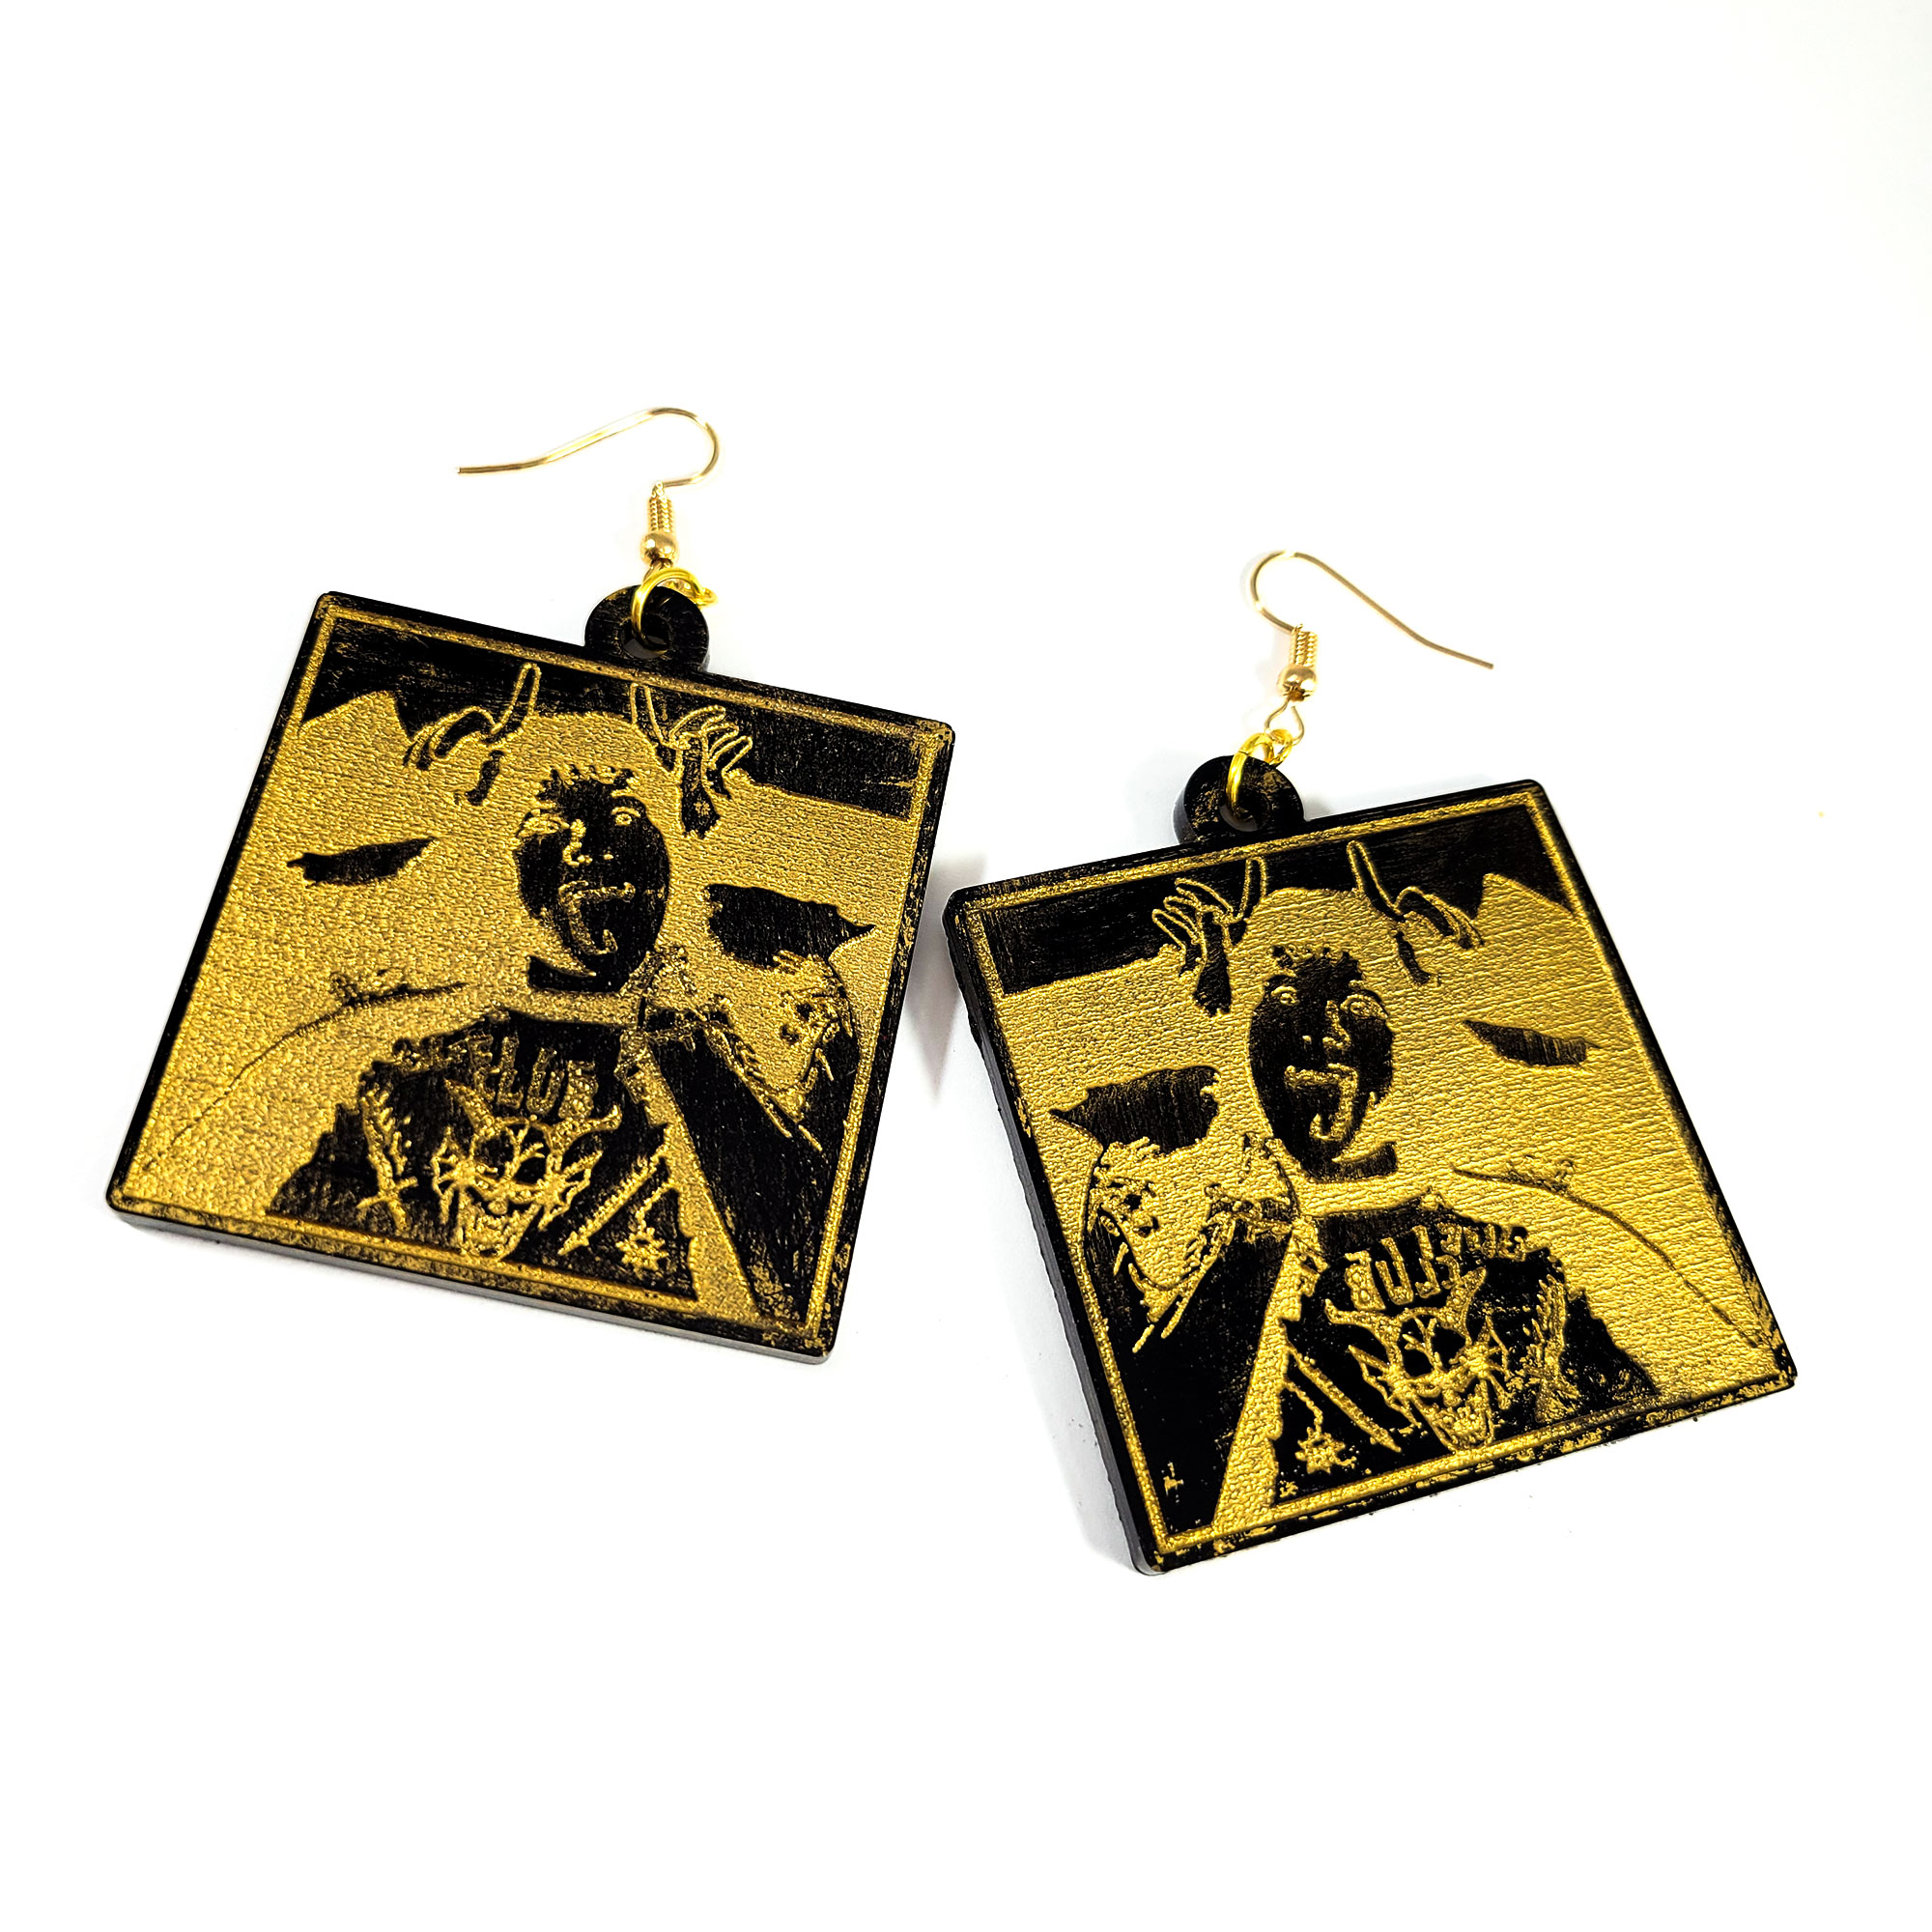 Black & Gold Dungeonmaster Earrings by Wilde Designs